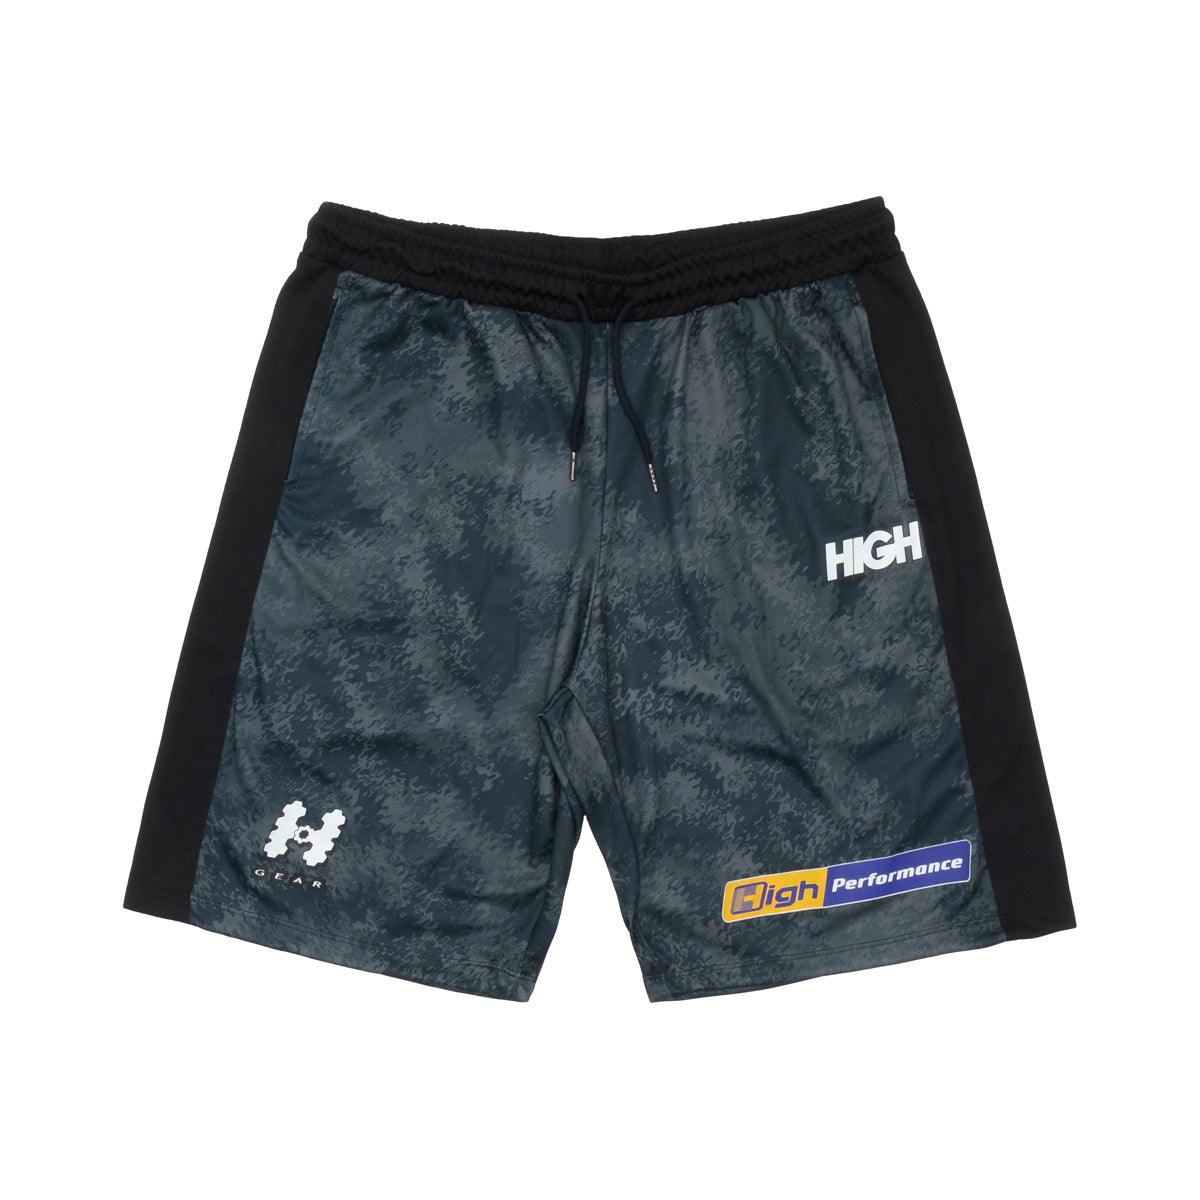 HIGH - Shorts Jersey Gear Camo - Slow Office